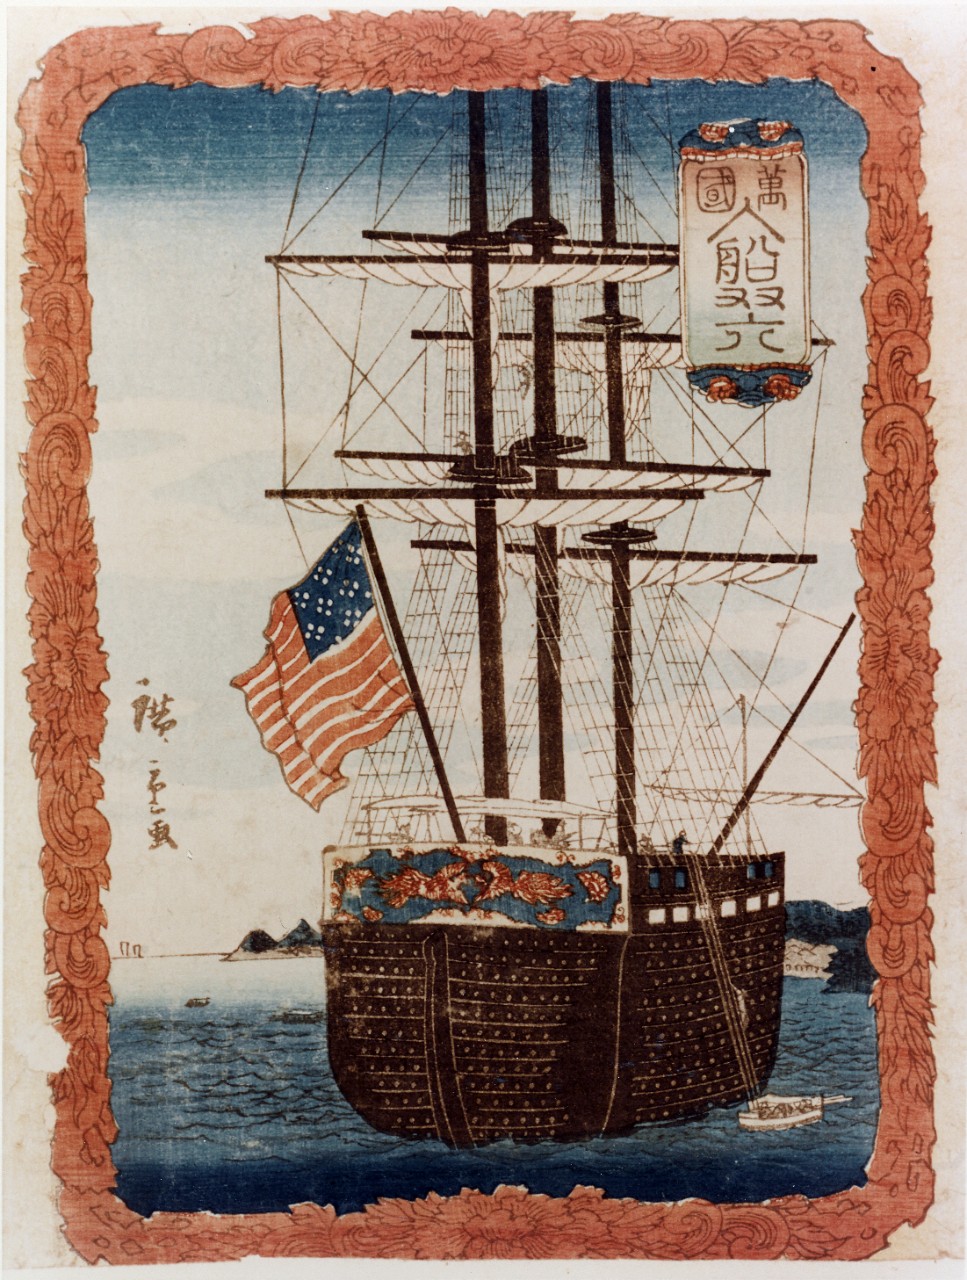 American Warship, Japanese print